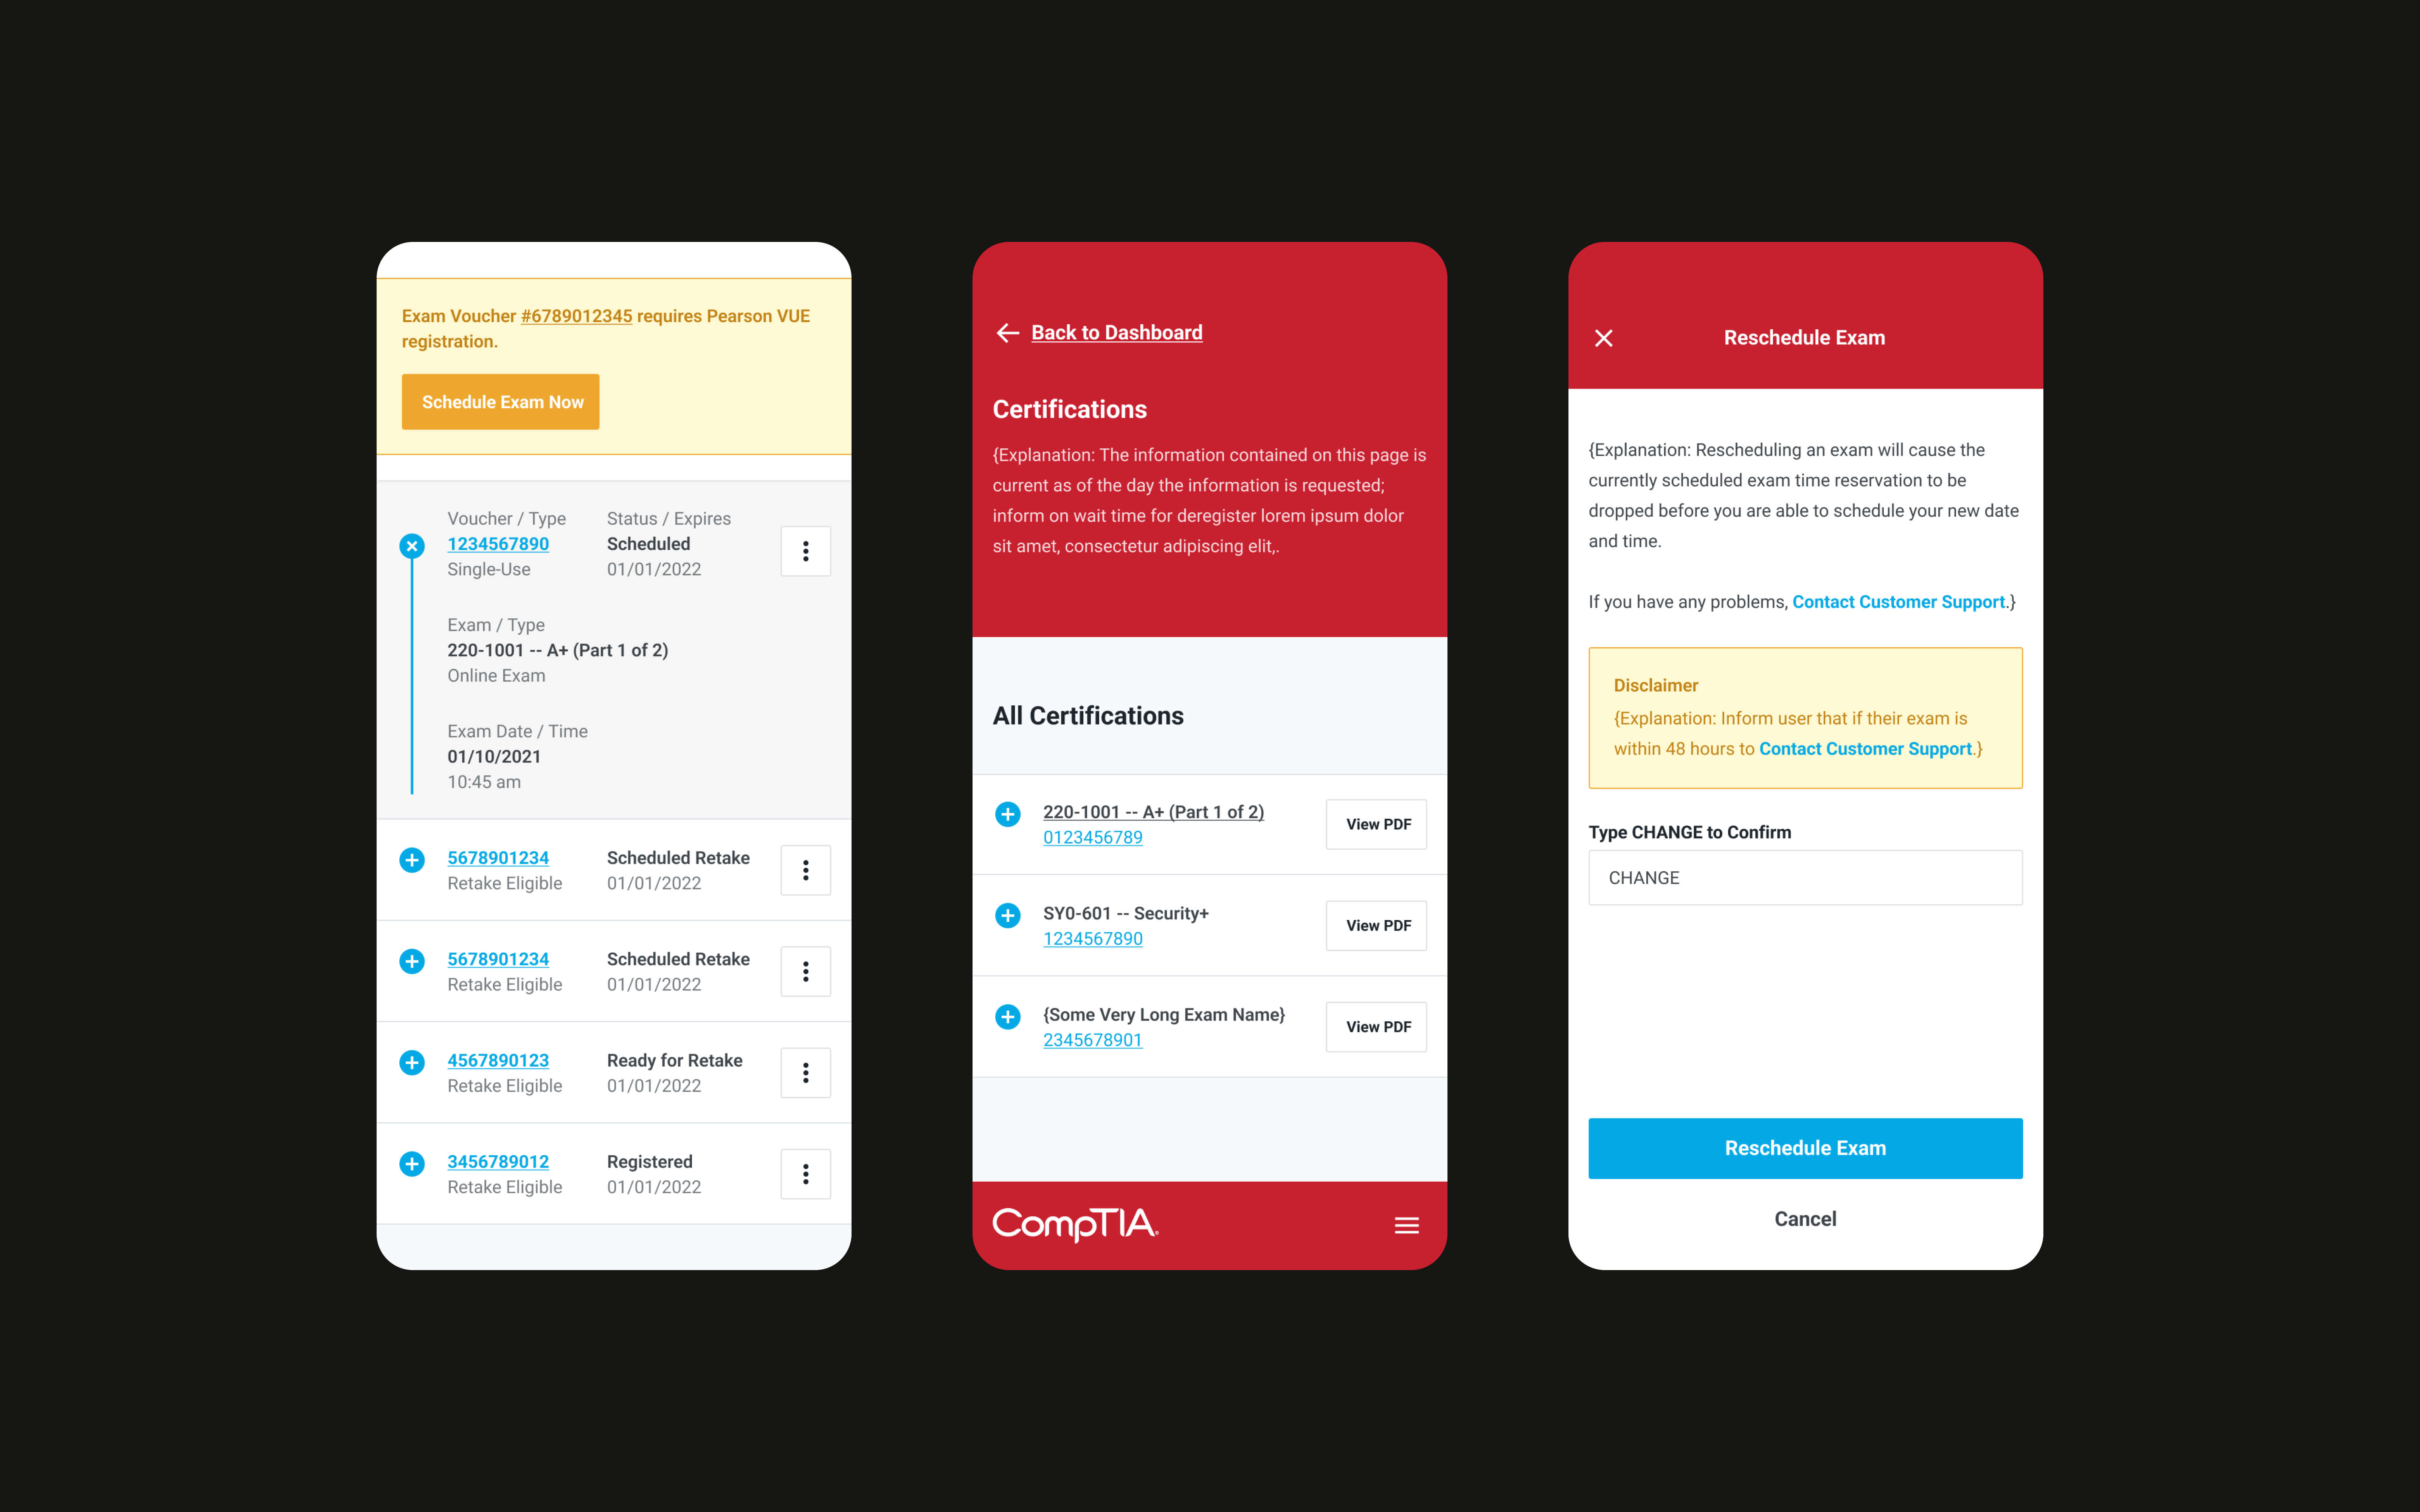 CompTIA Mobile Website UI Designs